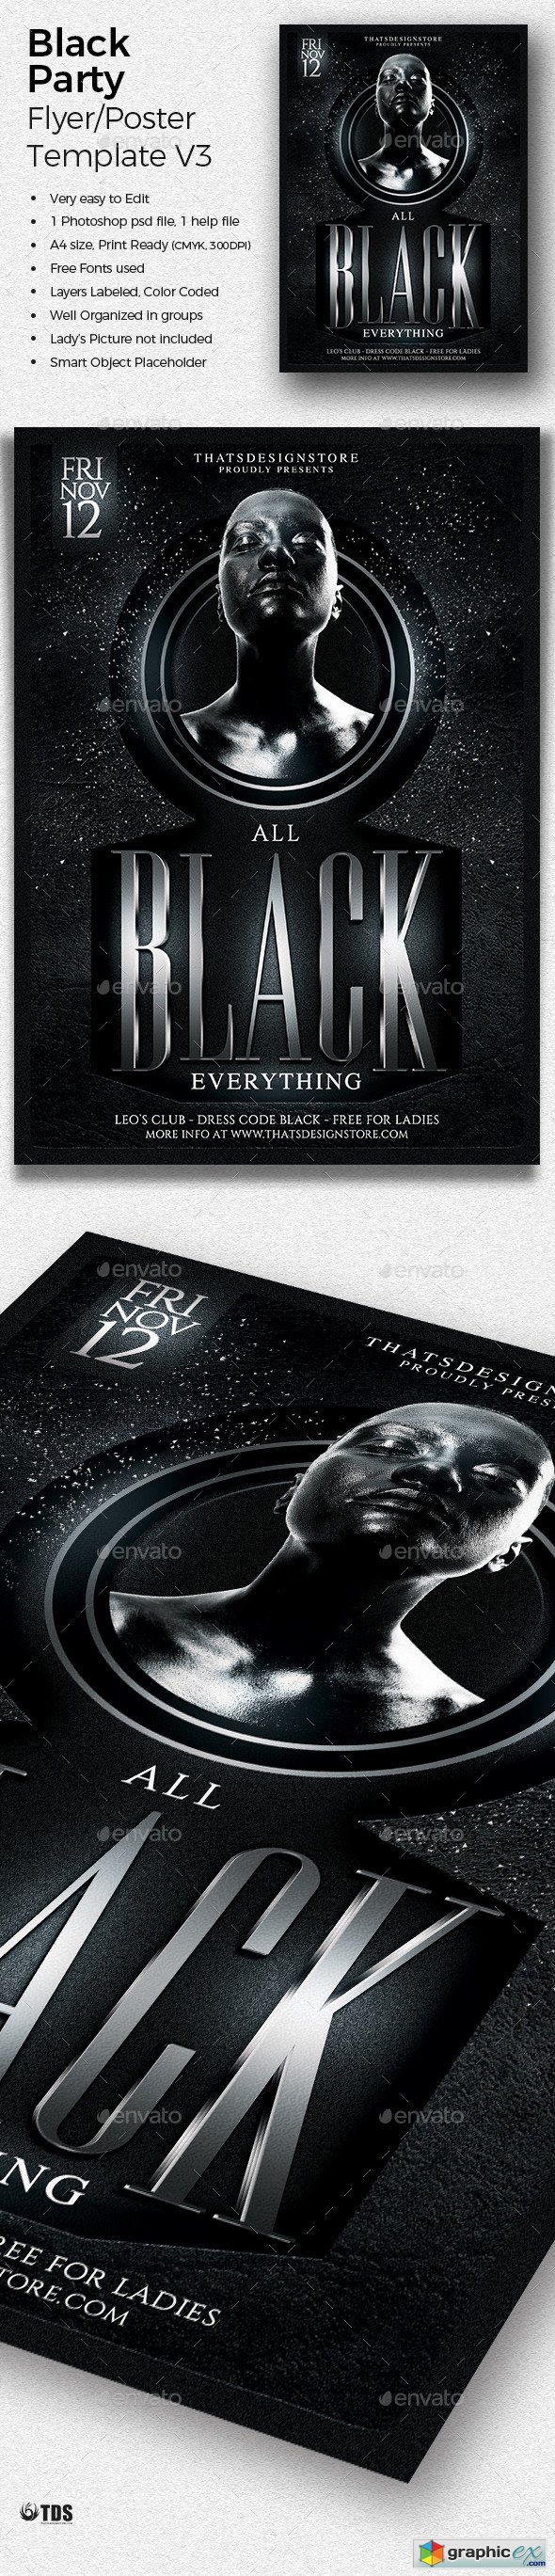 Black Party Flyer Template V3